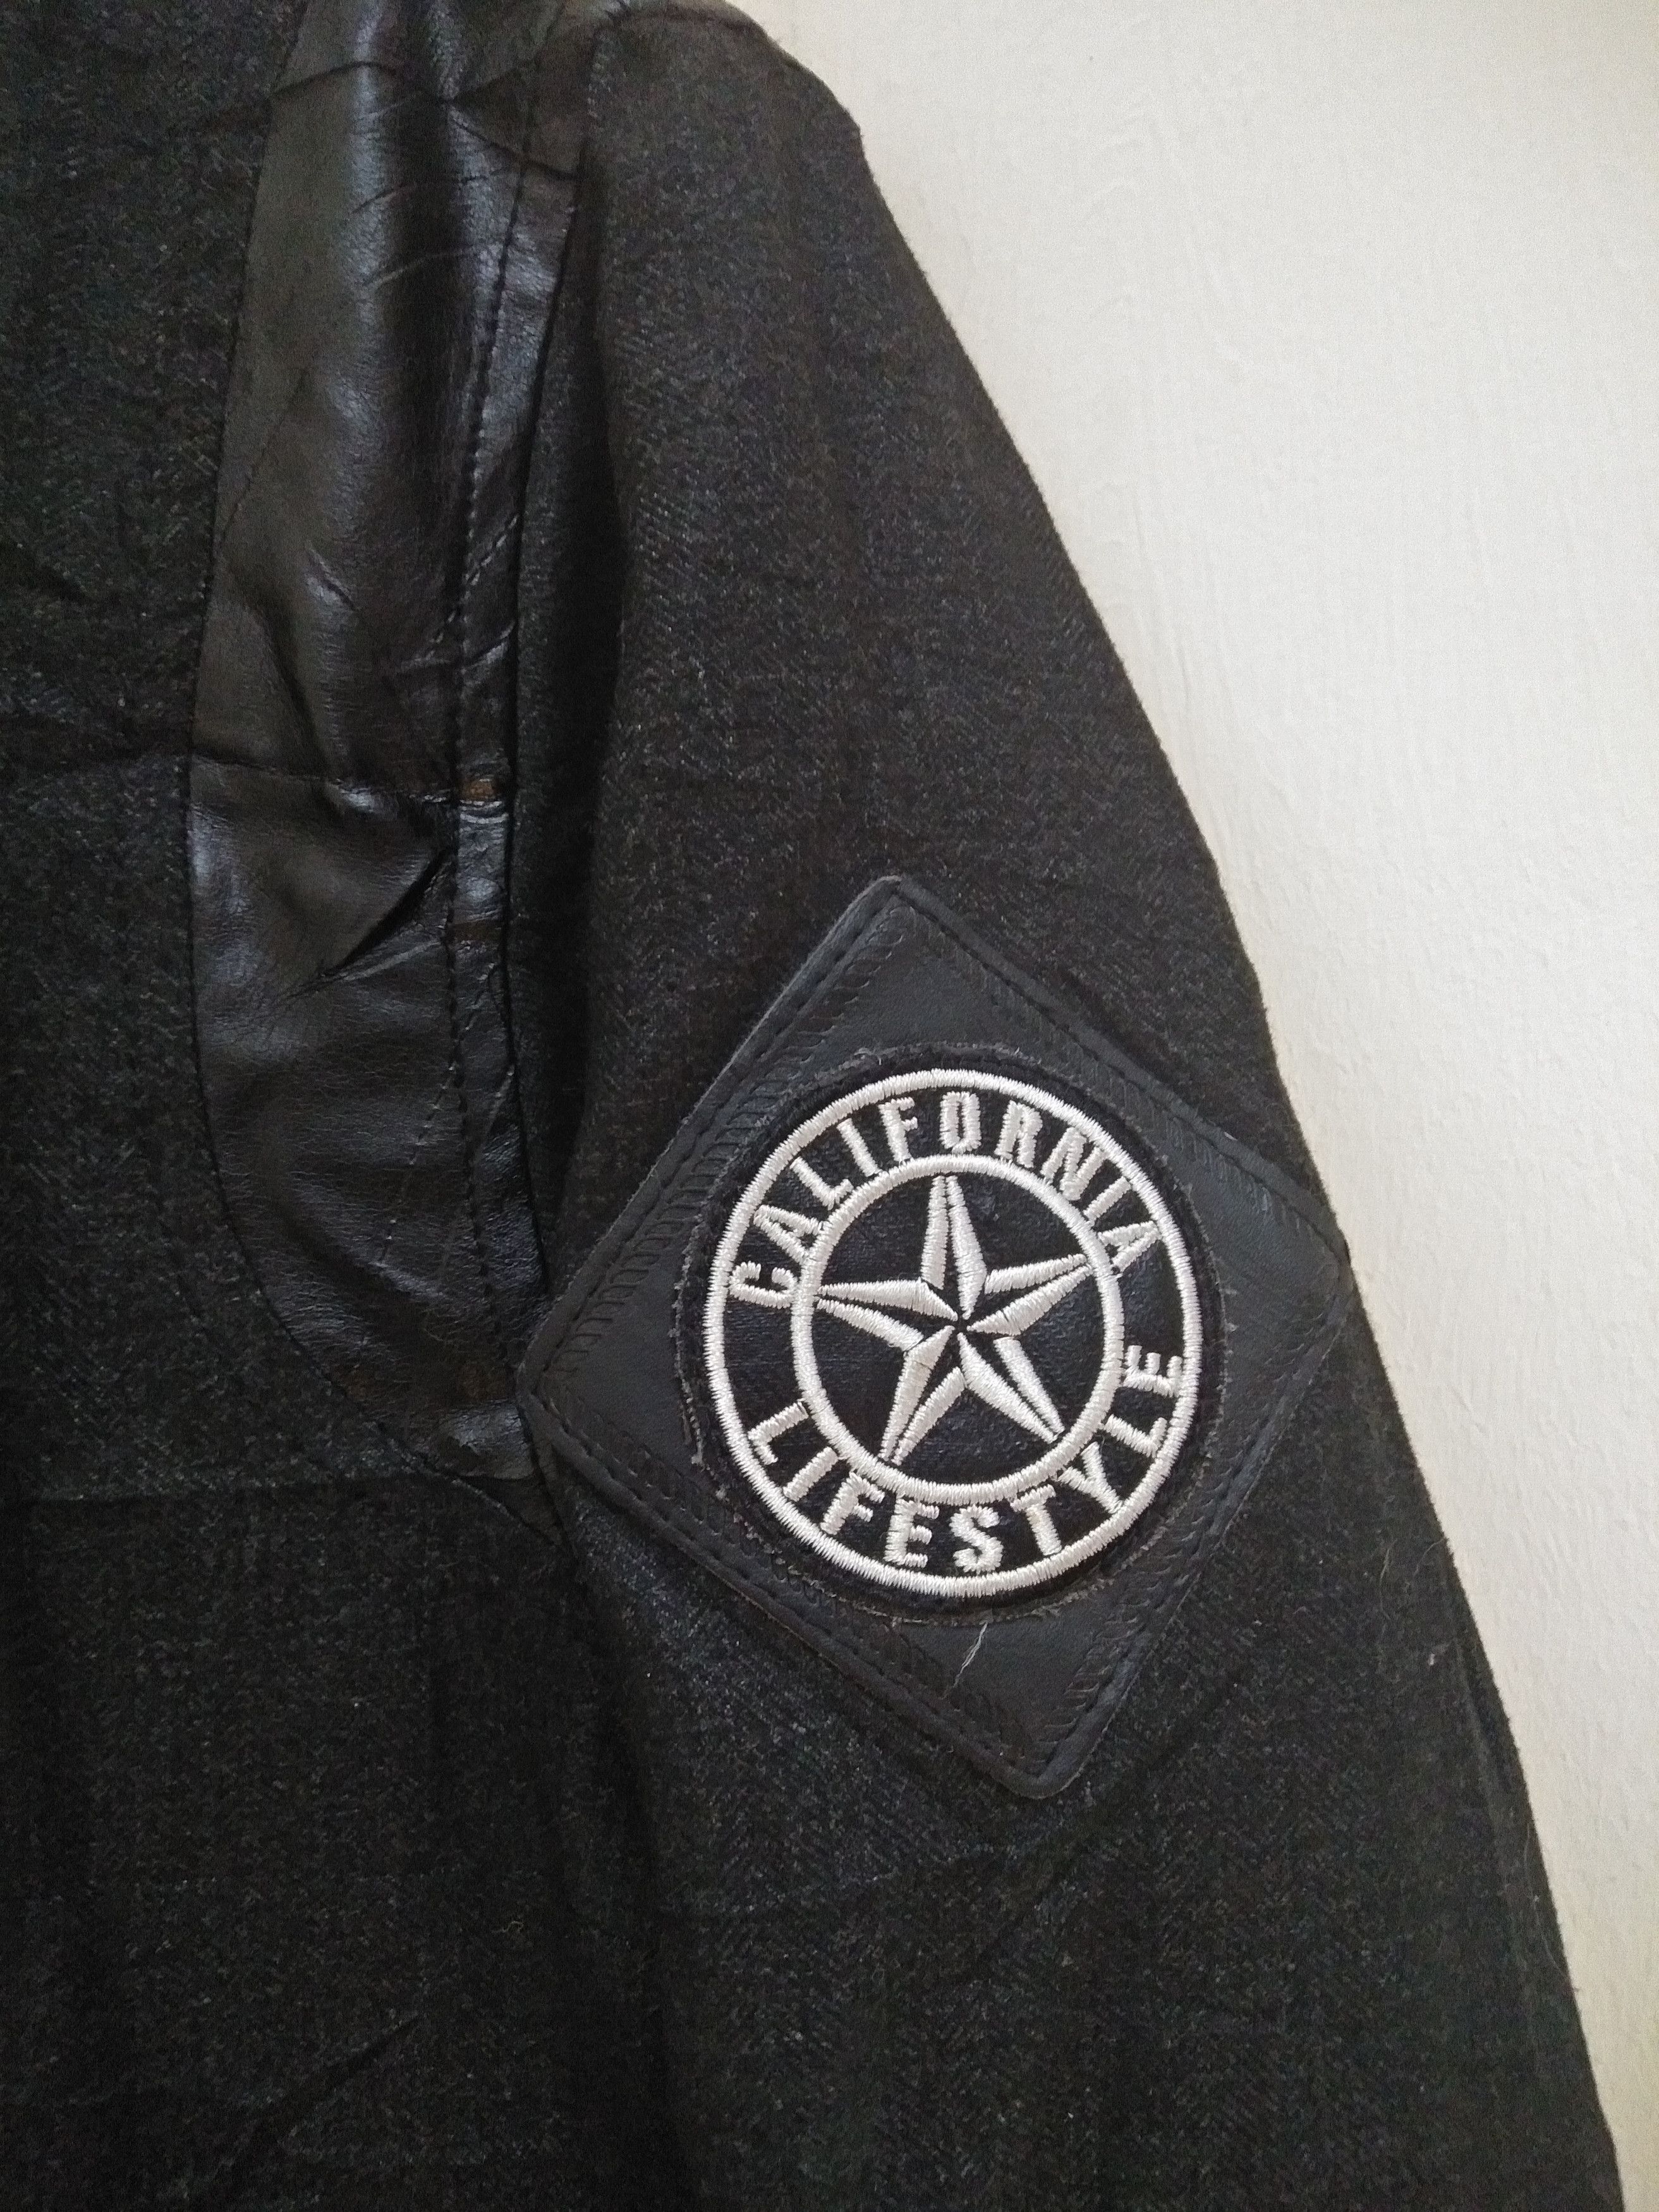 Vintage Vintage Hang Ten Jacket Size US L / EU 52-54 / 3 - 3 Thumbnail